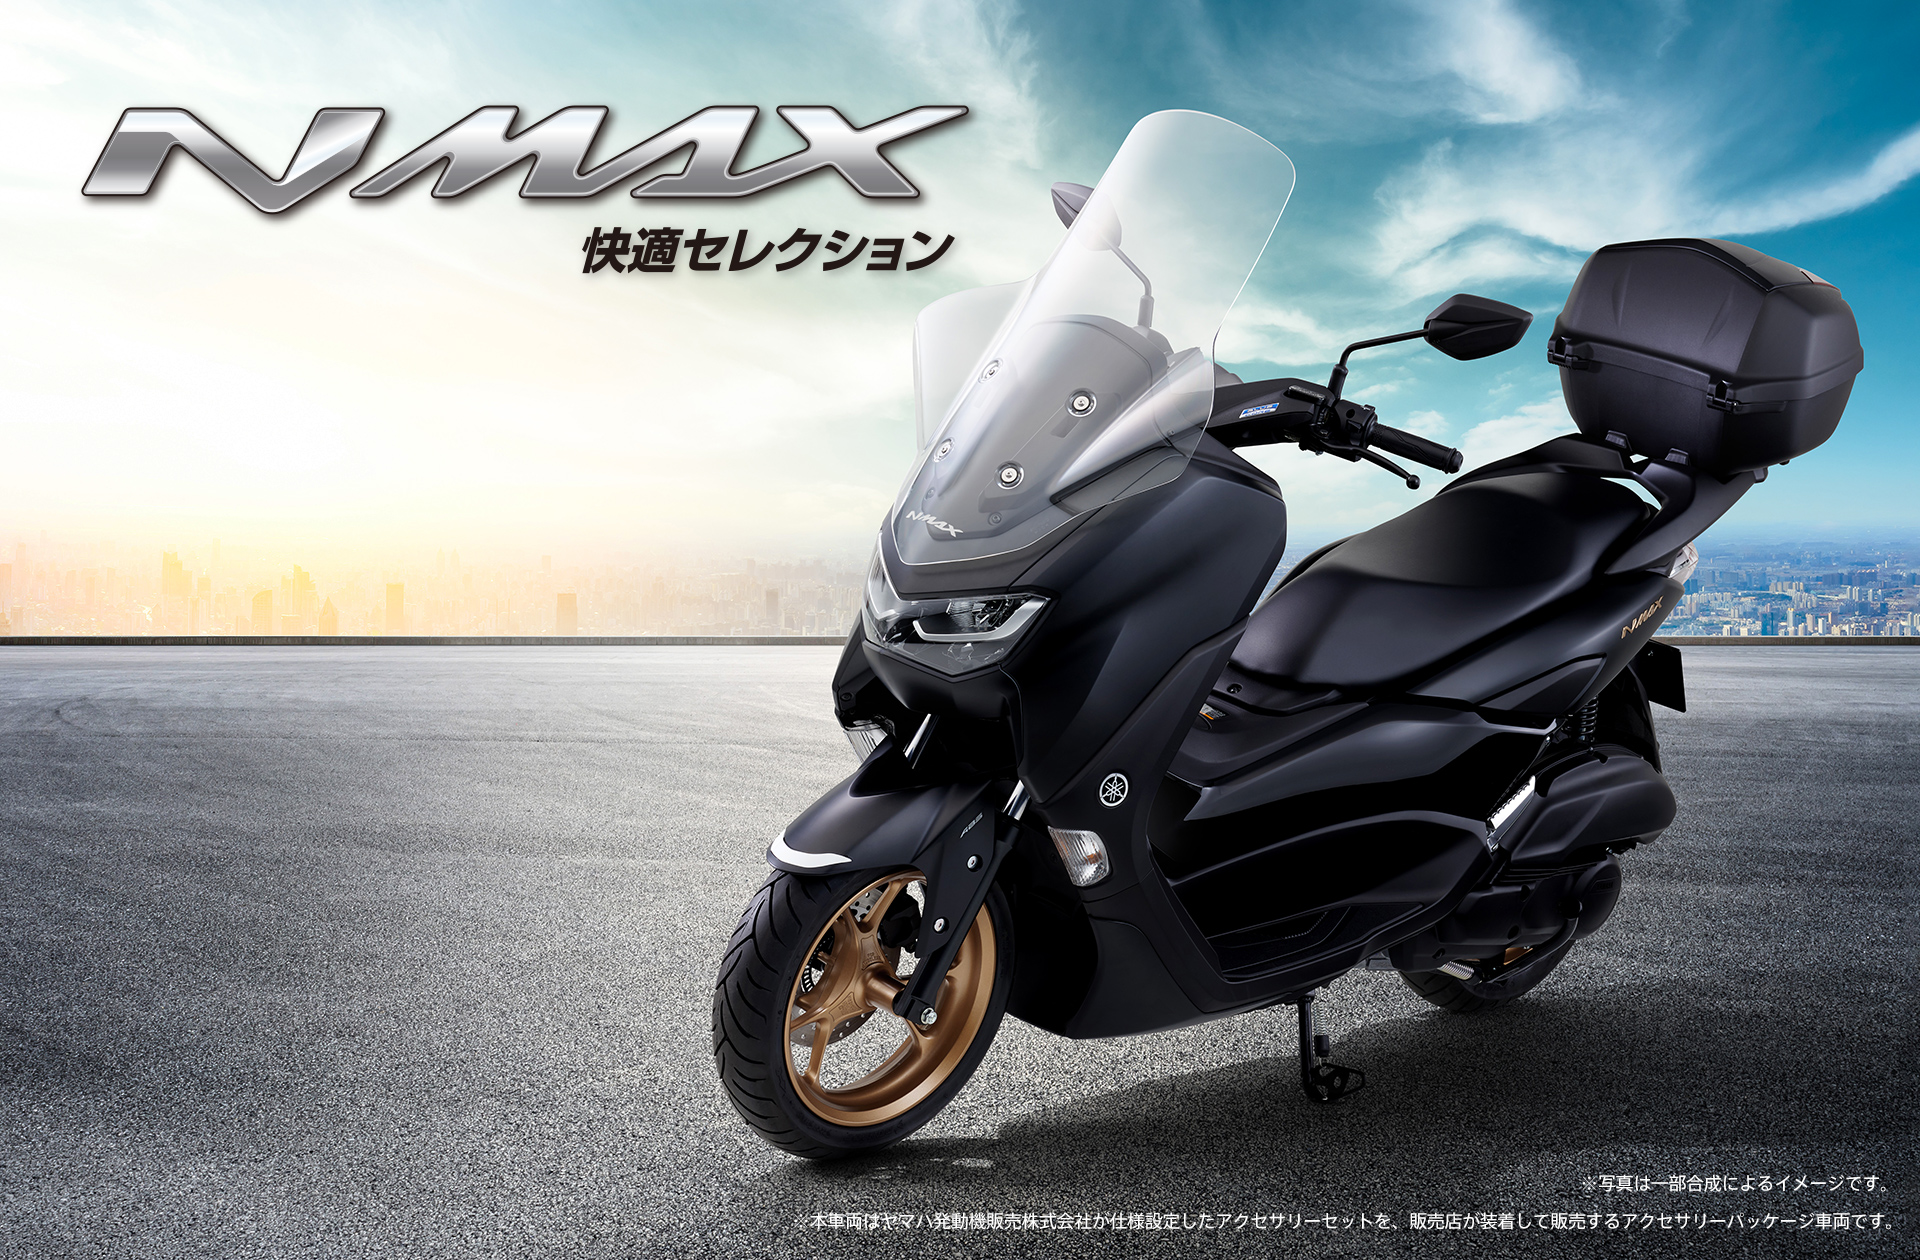 NMAX ABS 快適セレクション - バイク・スクーター | ヤマハ発動機